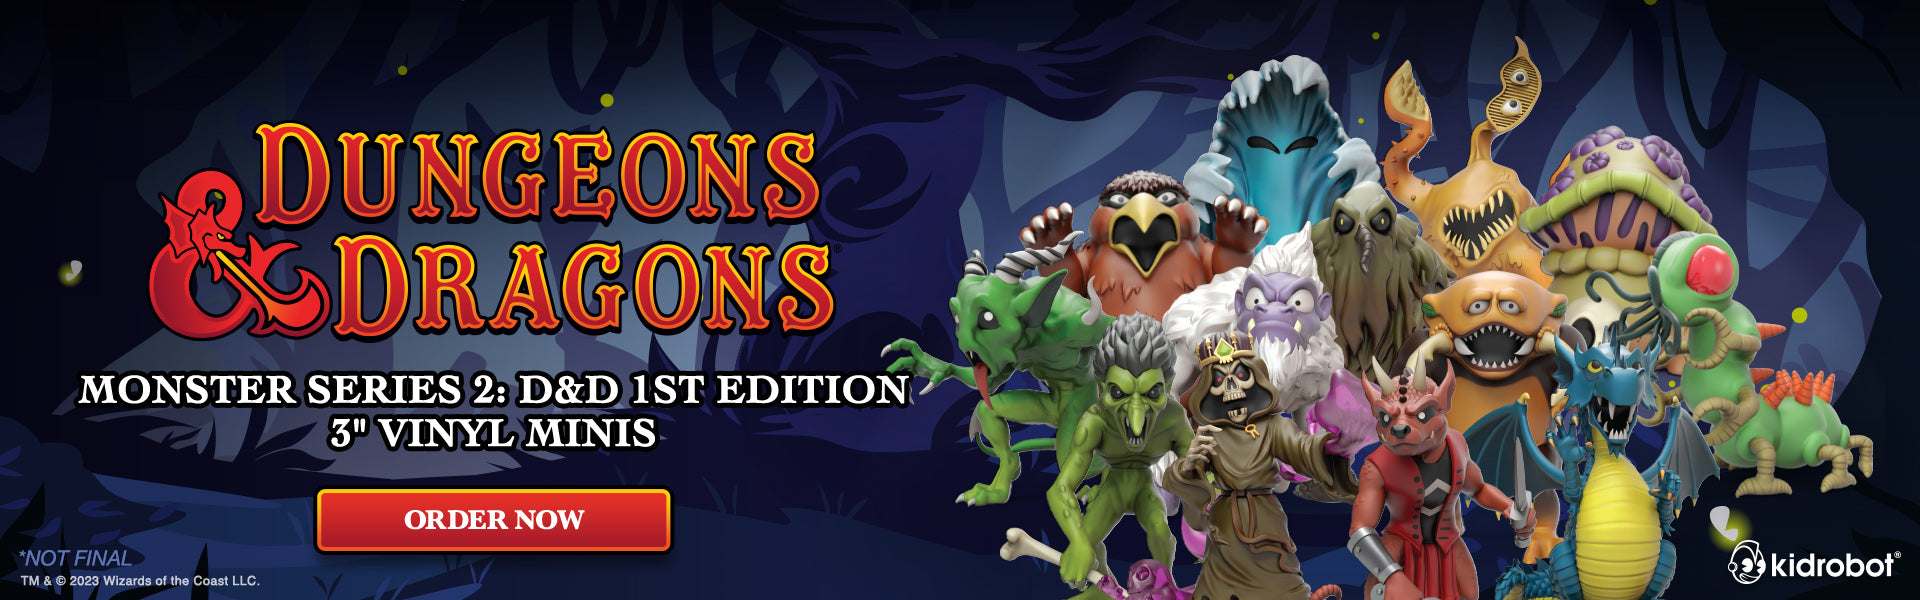 Dungeons & Dragons 3" Vinyl Minis - Monster Series 2: D&D 1st Edition (PRE-ORDER)